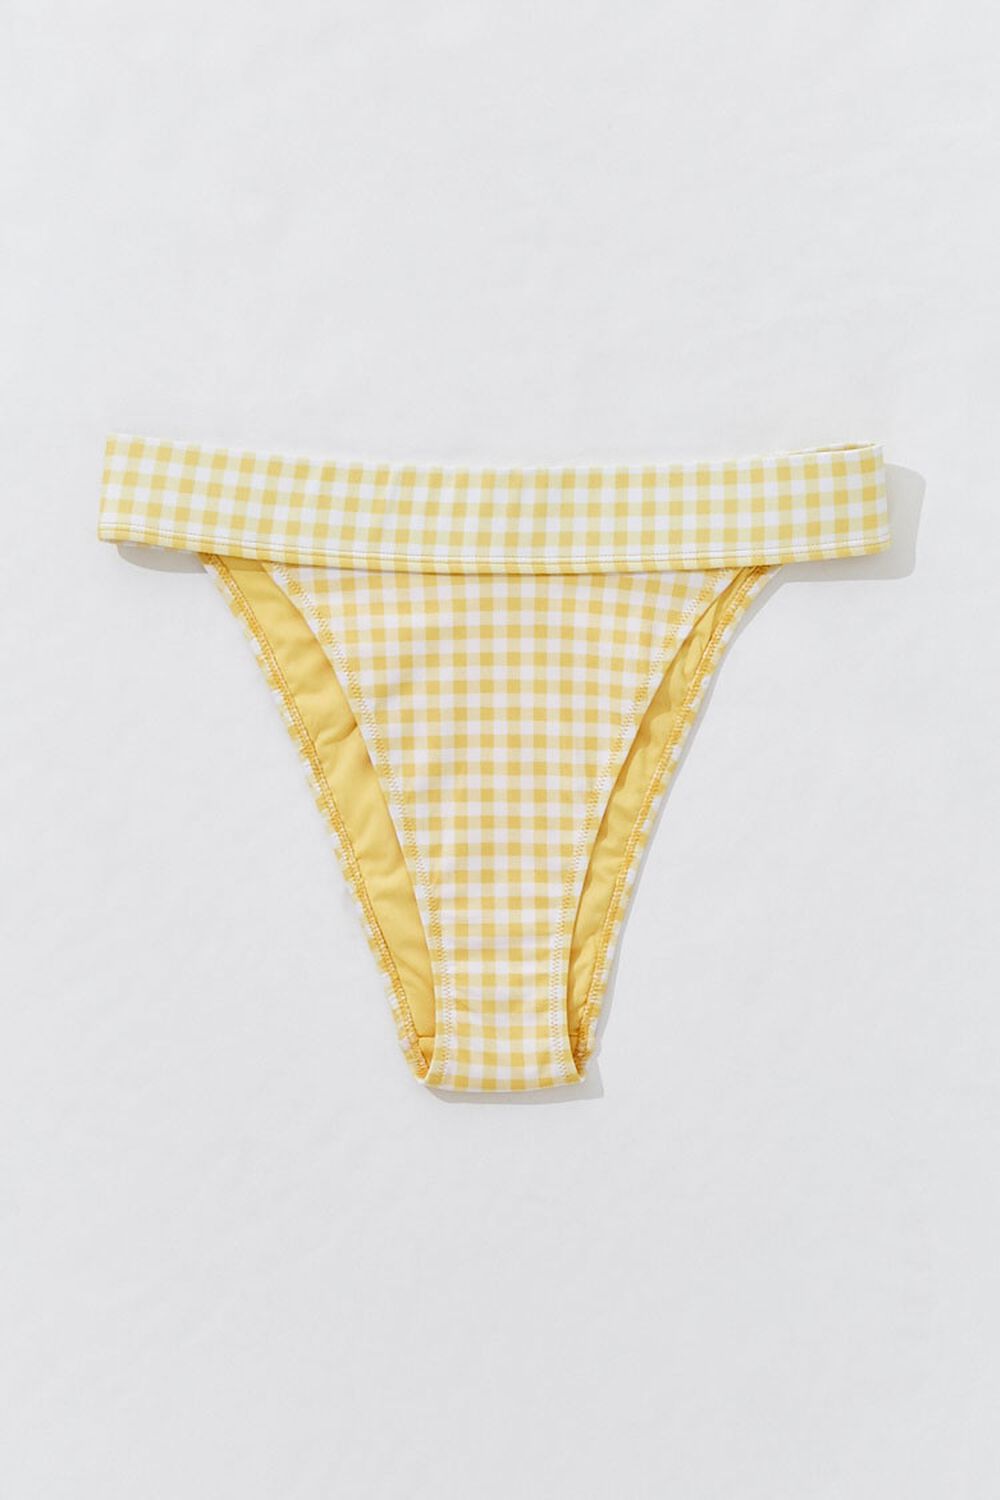 YELLOW/WHITE Gingham High-Cut Bikini Bottoms, image 1